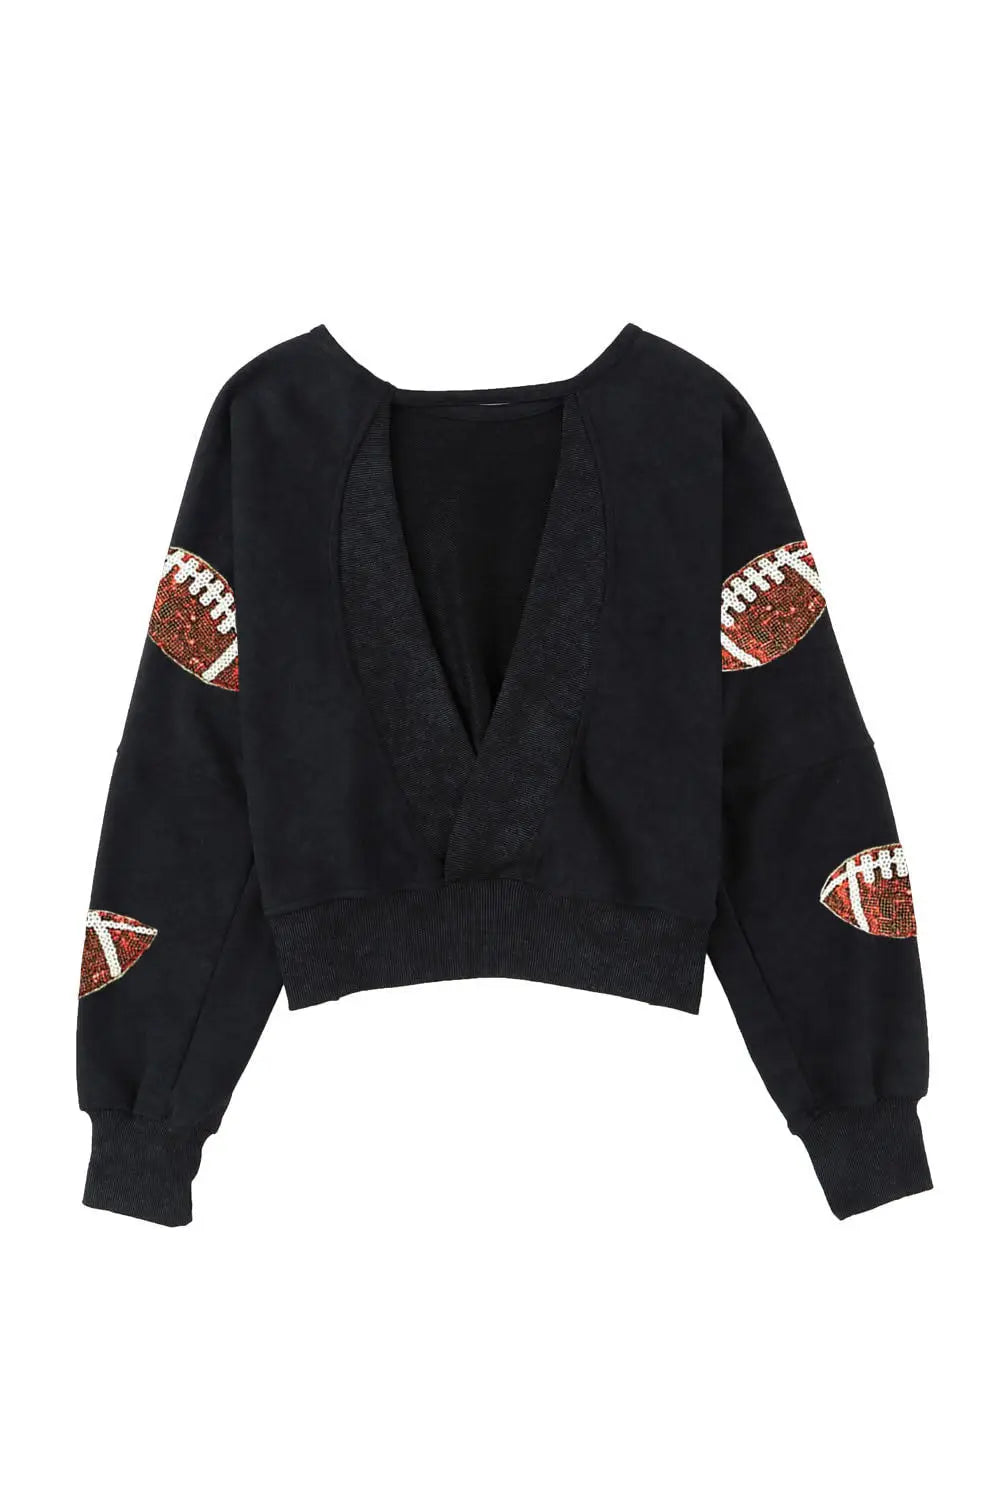 Black sequin rugby graphic pullover sweatshirt - tops